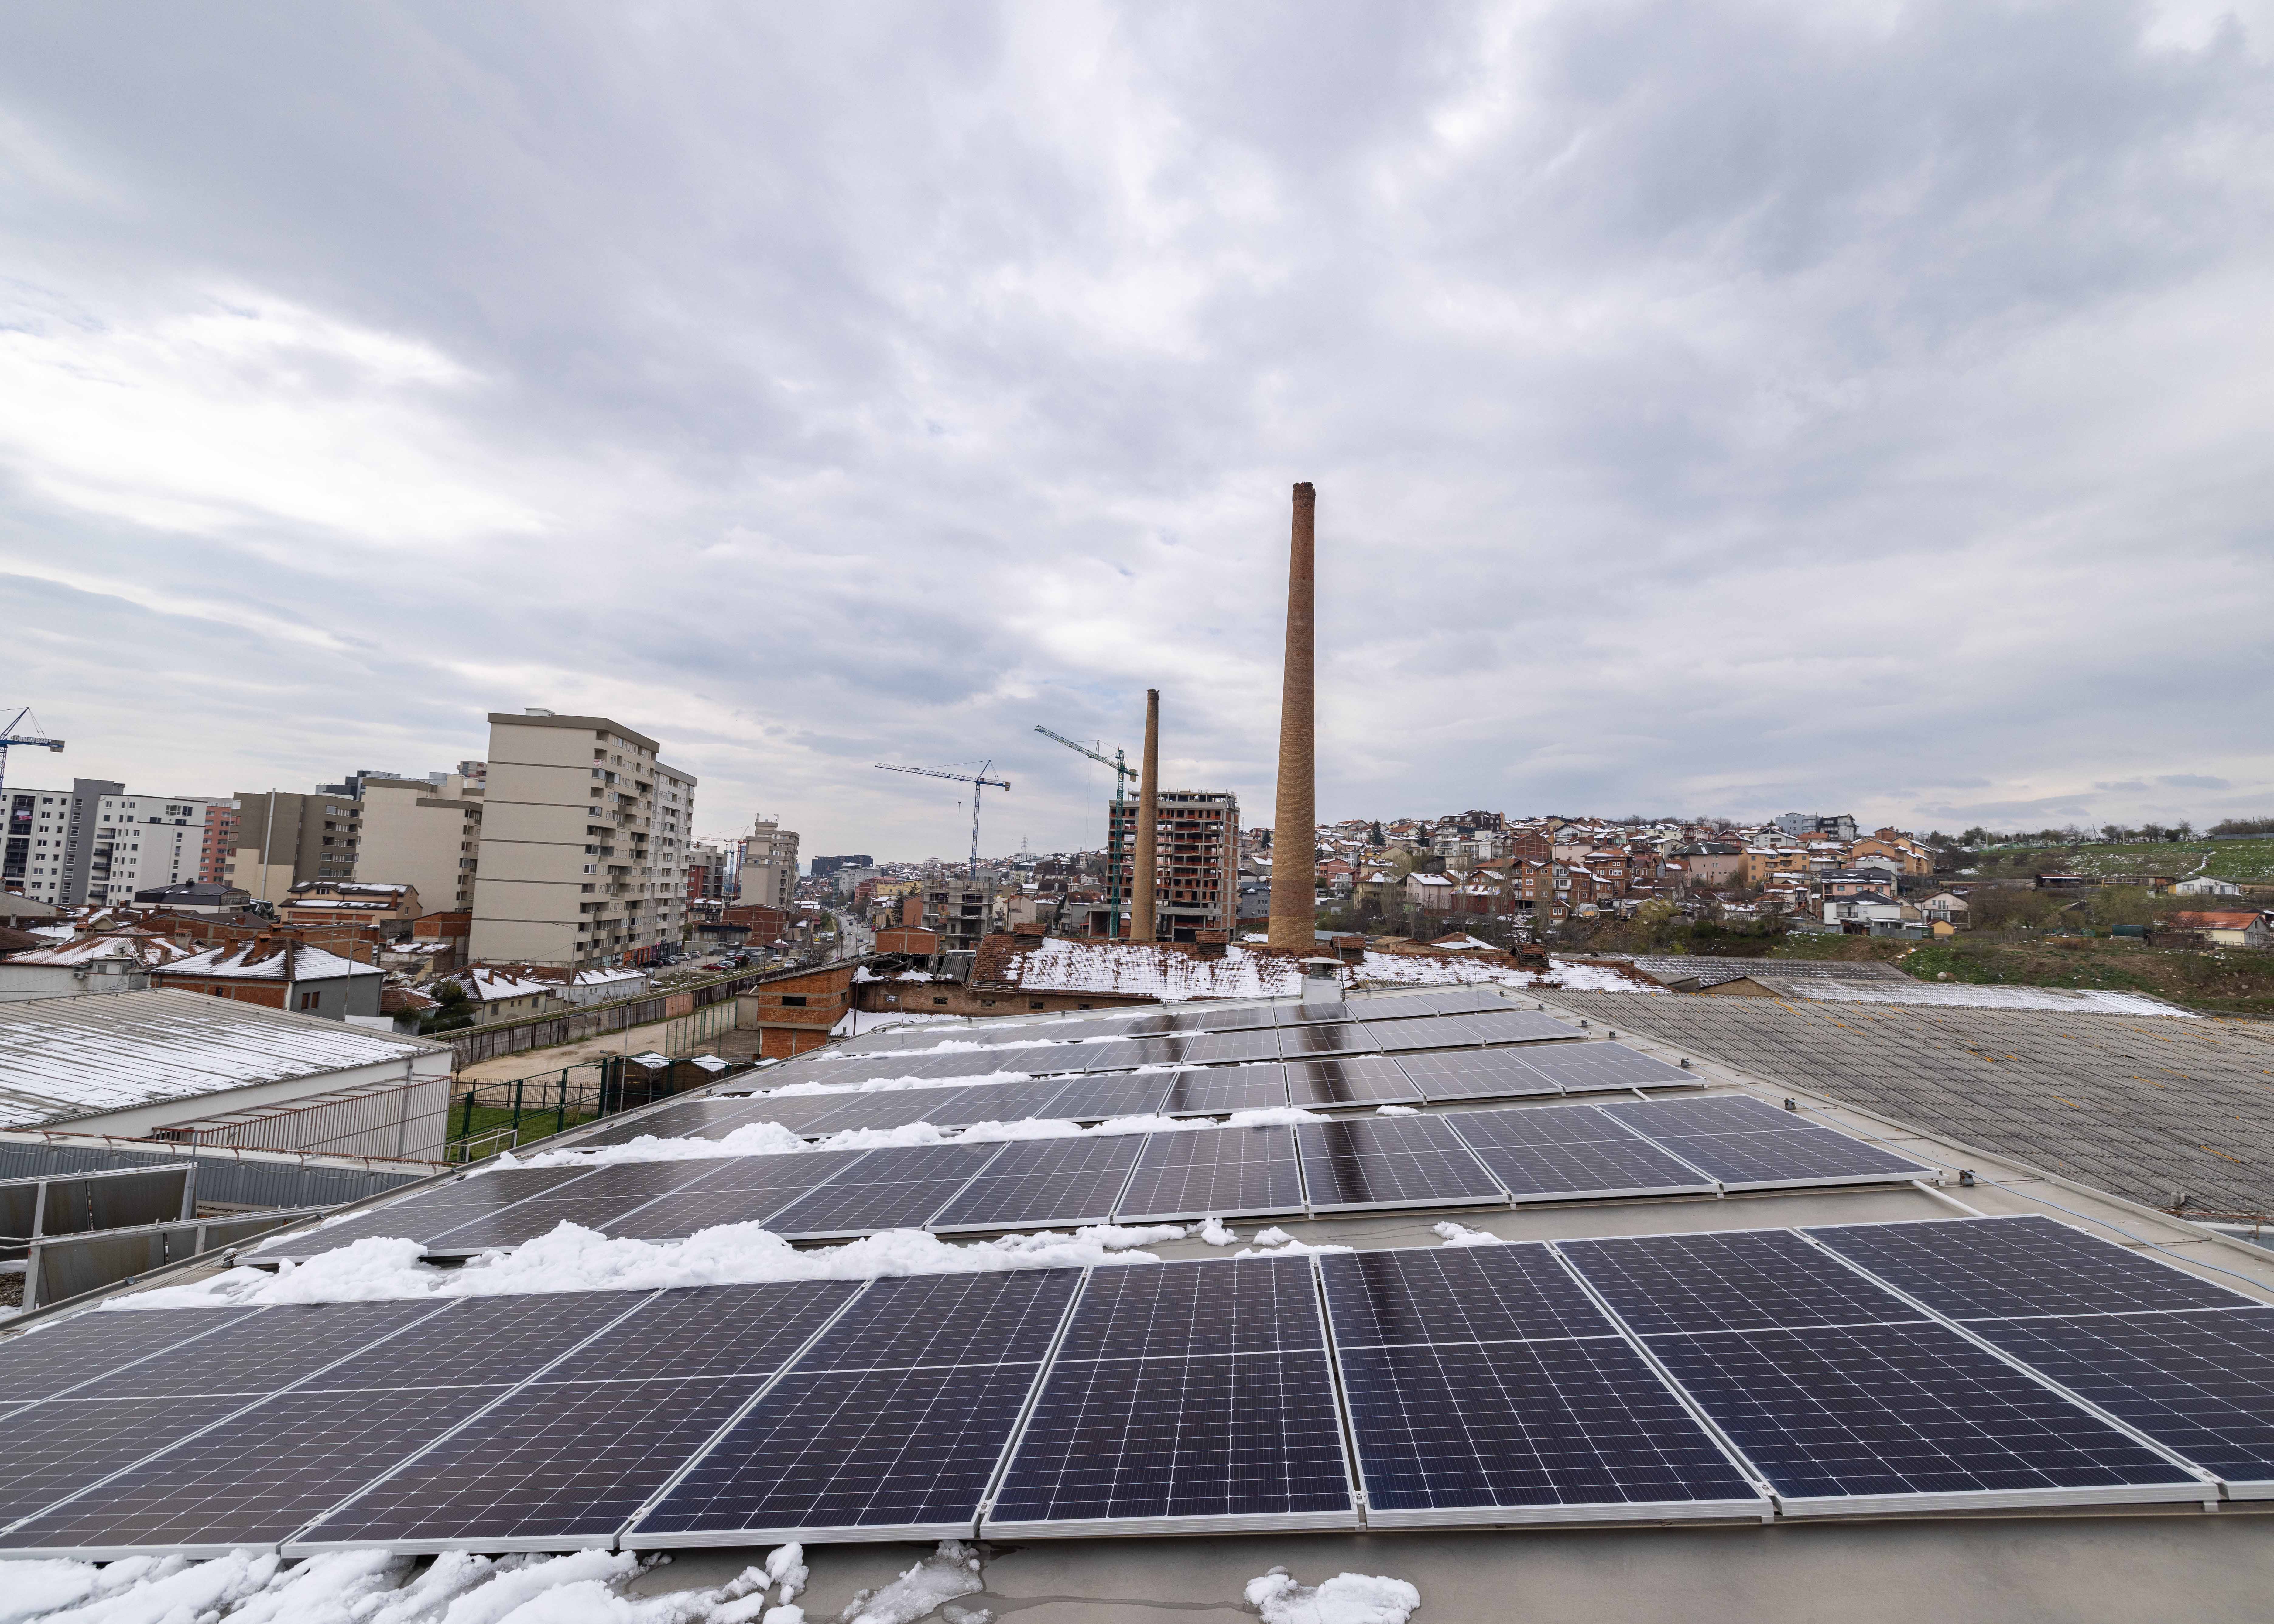 KFOS launches 'Solar panels in schools' in Prishtina